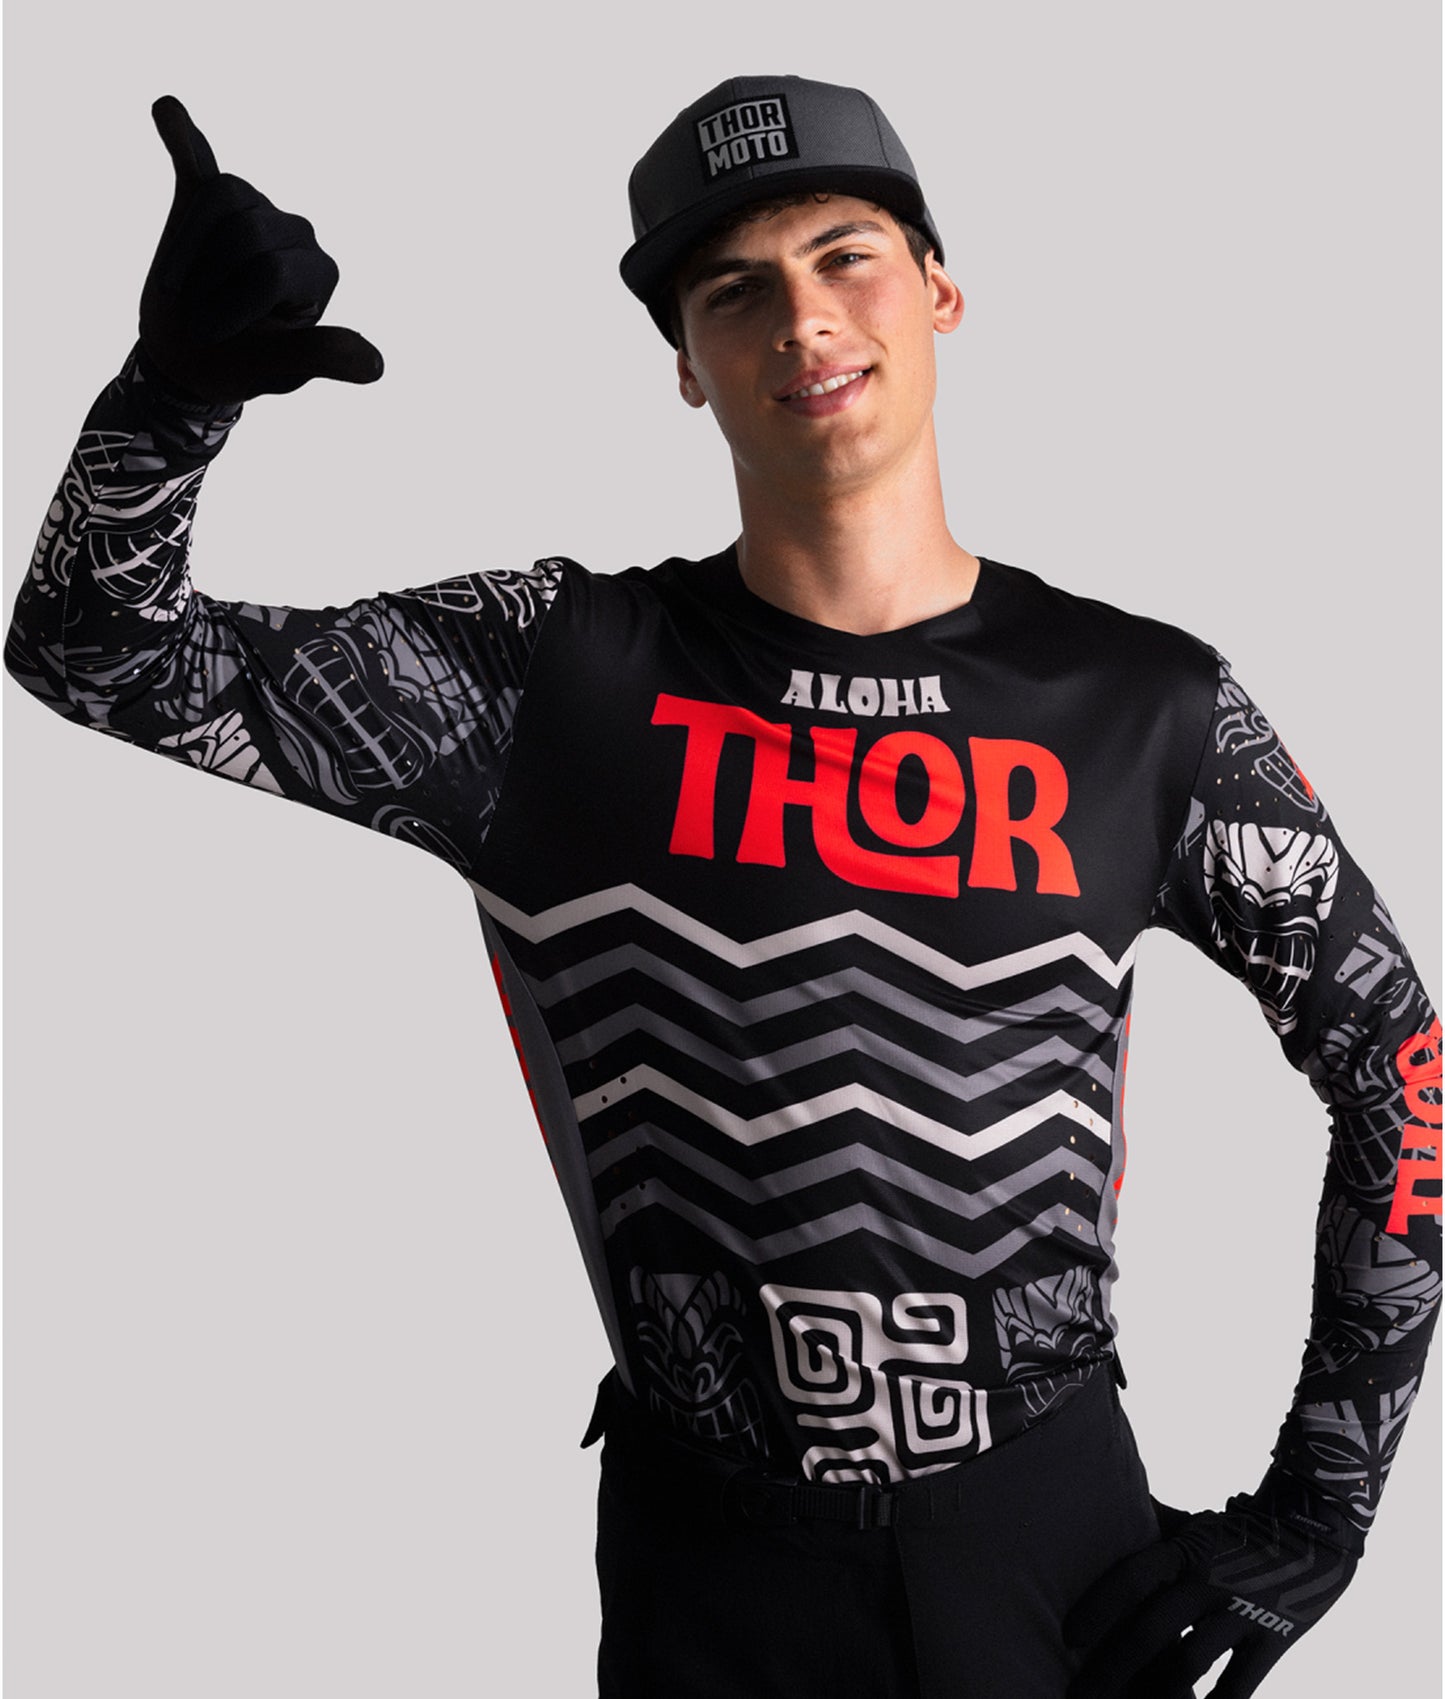 Thor Prime Aloha Gear Combo (Black/Grey)